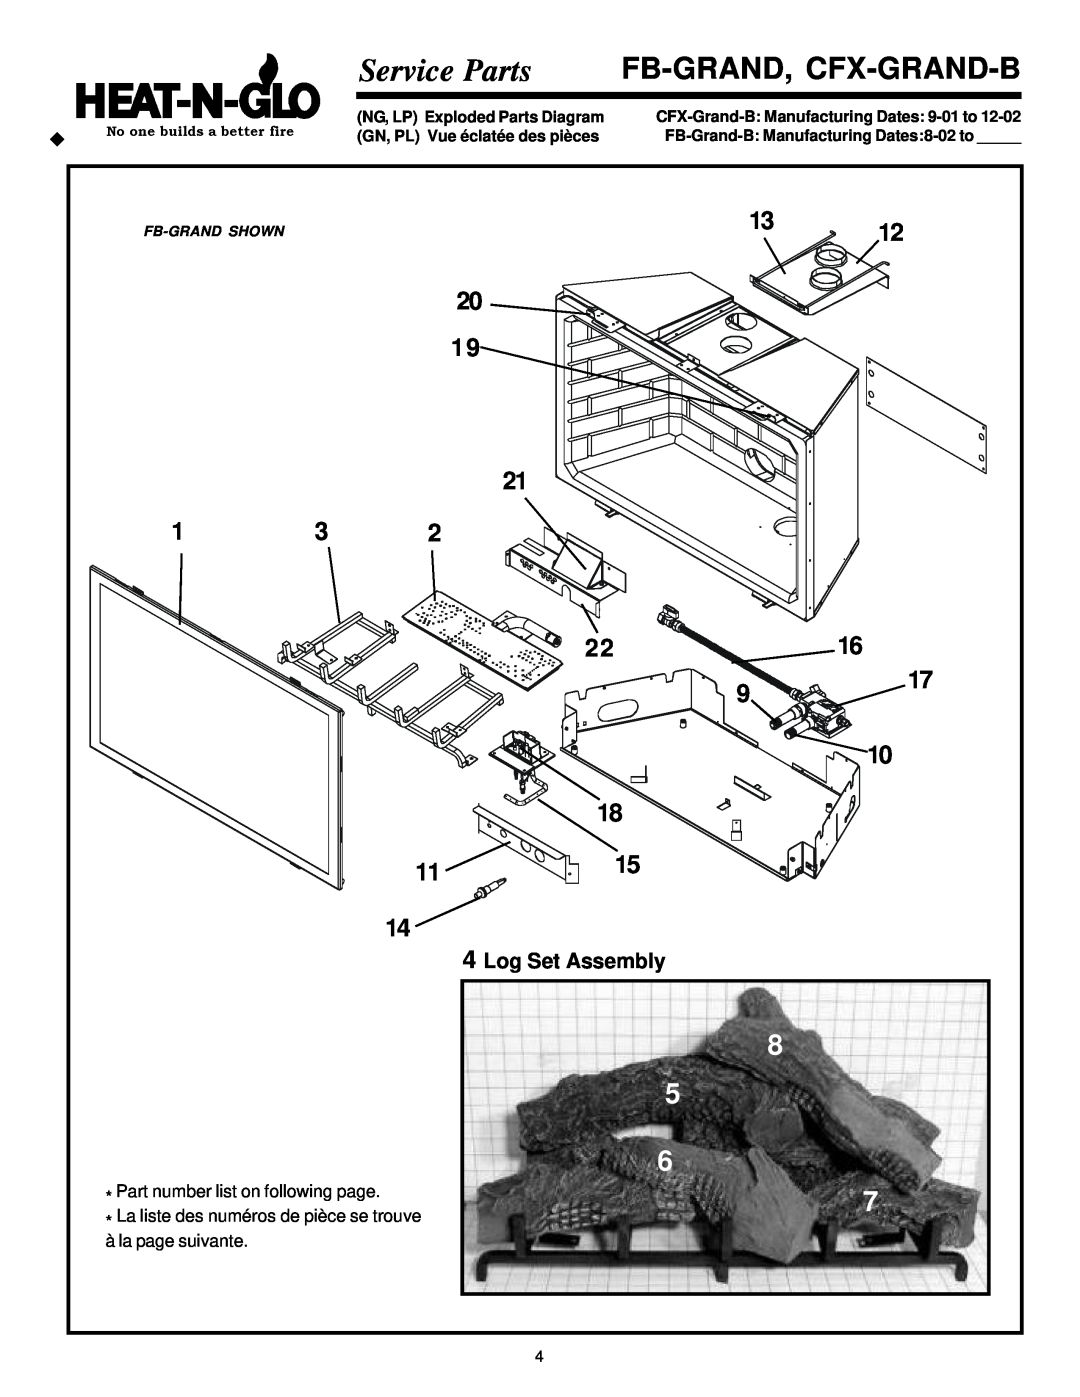 Heat & Glo LifeStyle FB-Grand manual Service Parts, 4Log Set Assembly, Fb-Grand, Cfx-Grand-B, NG, LP Exploded Parts Diagram 